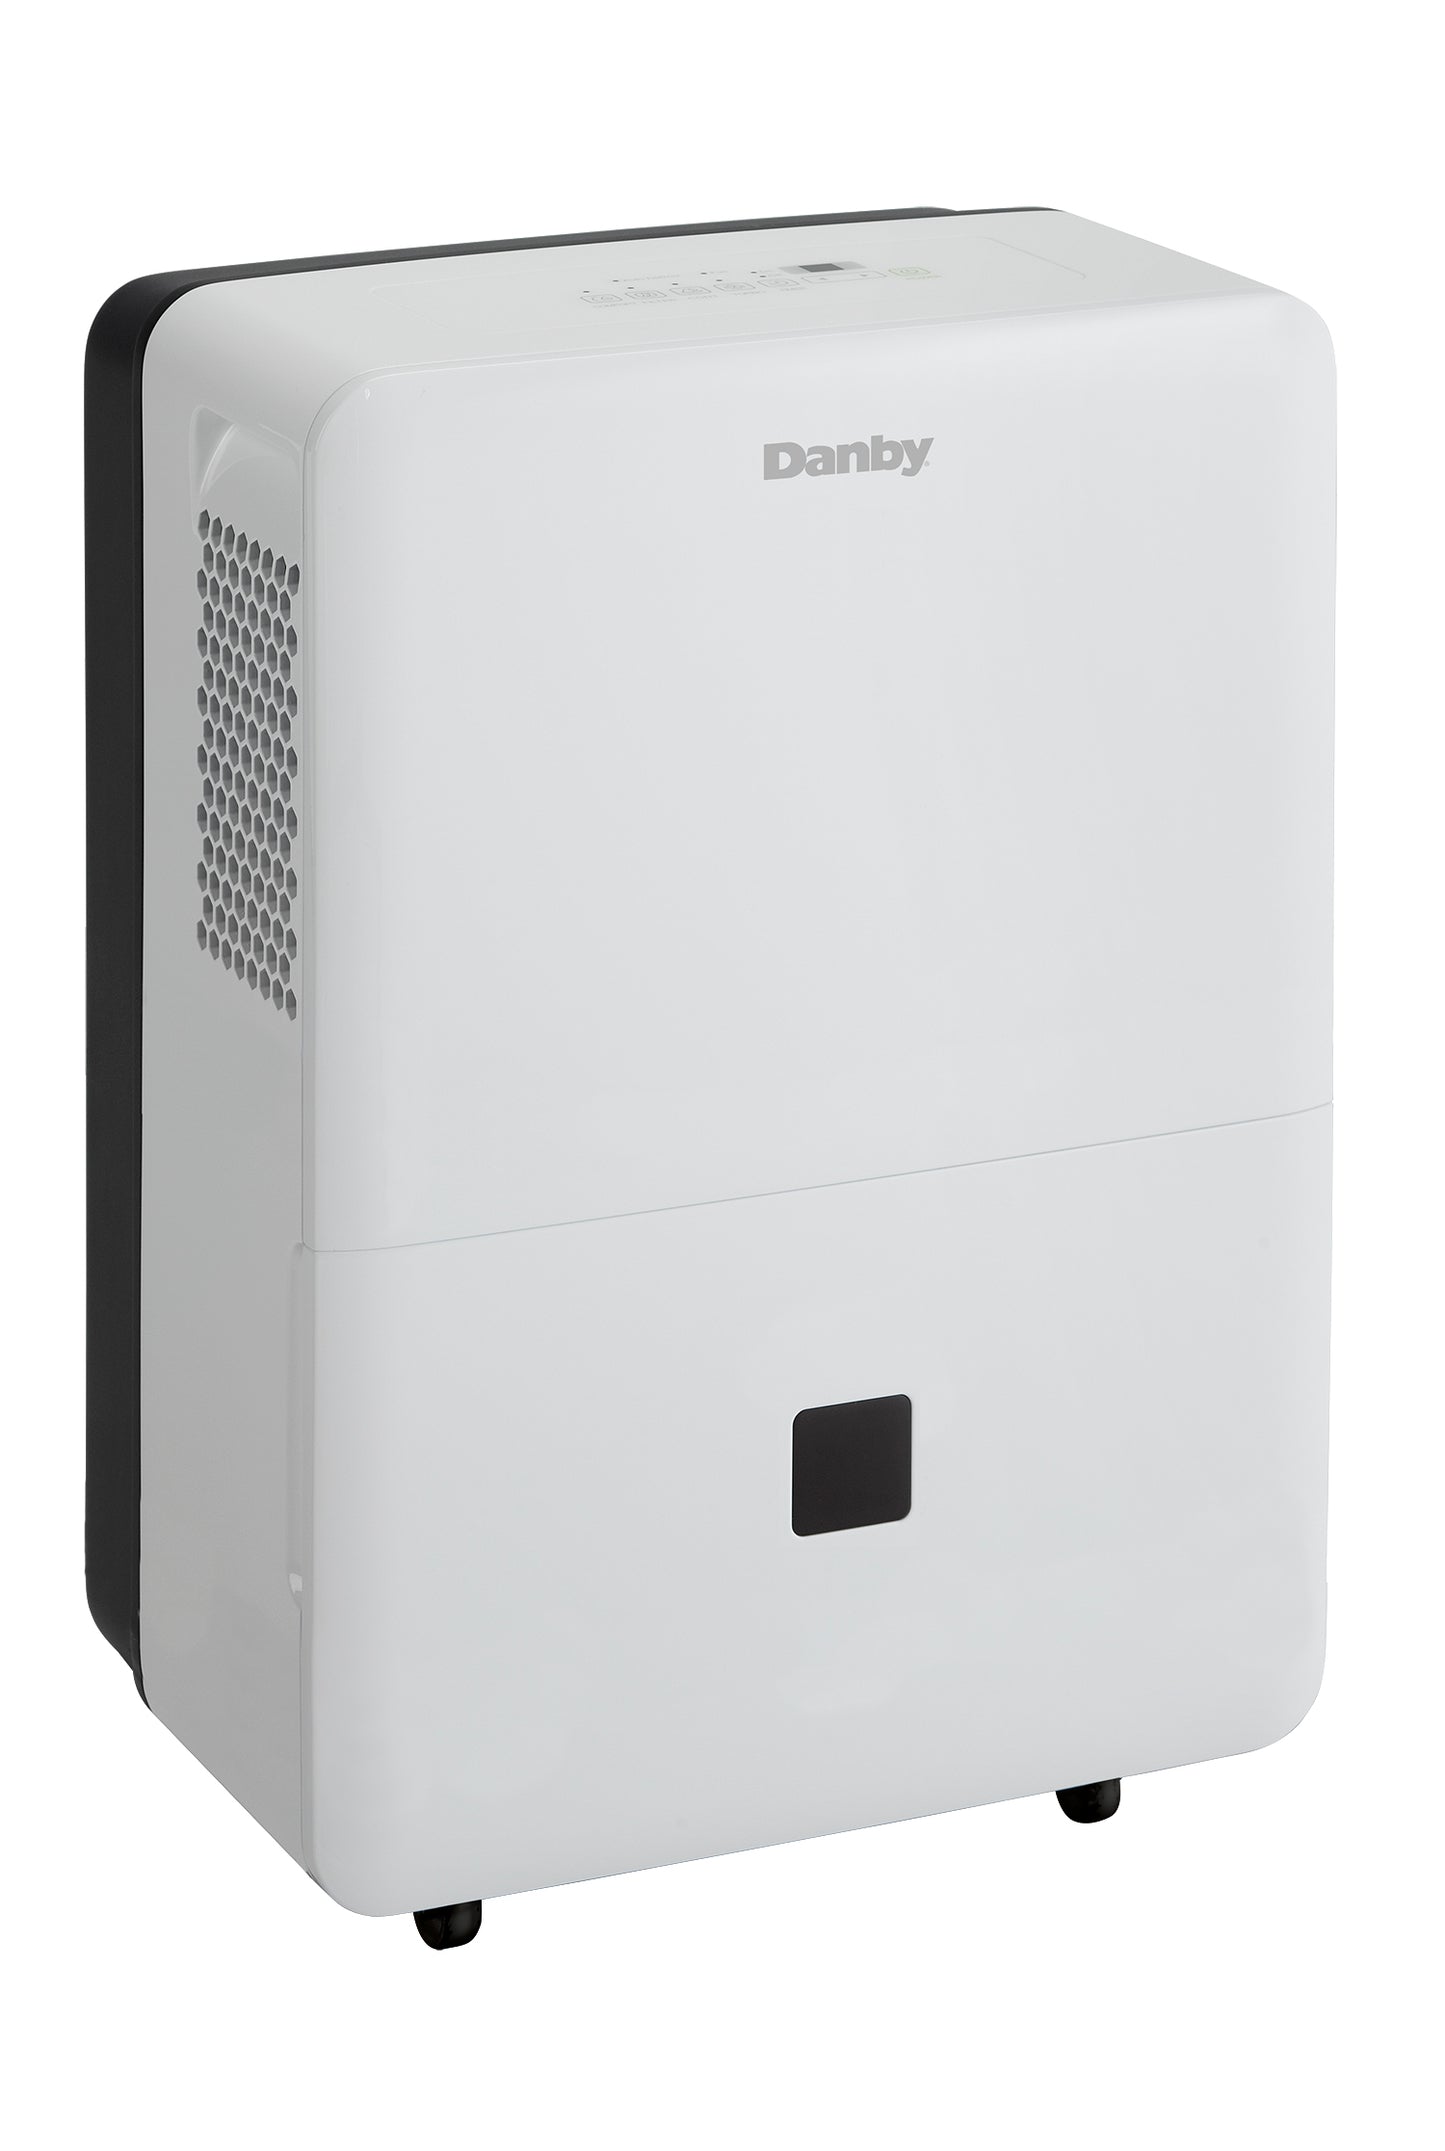 Danby 40 Pint Dehumidifier - White